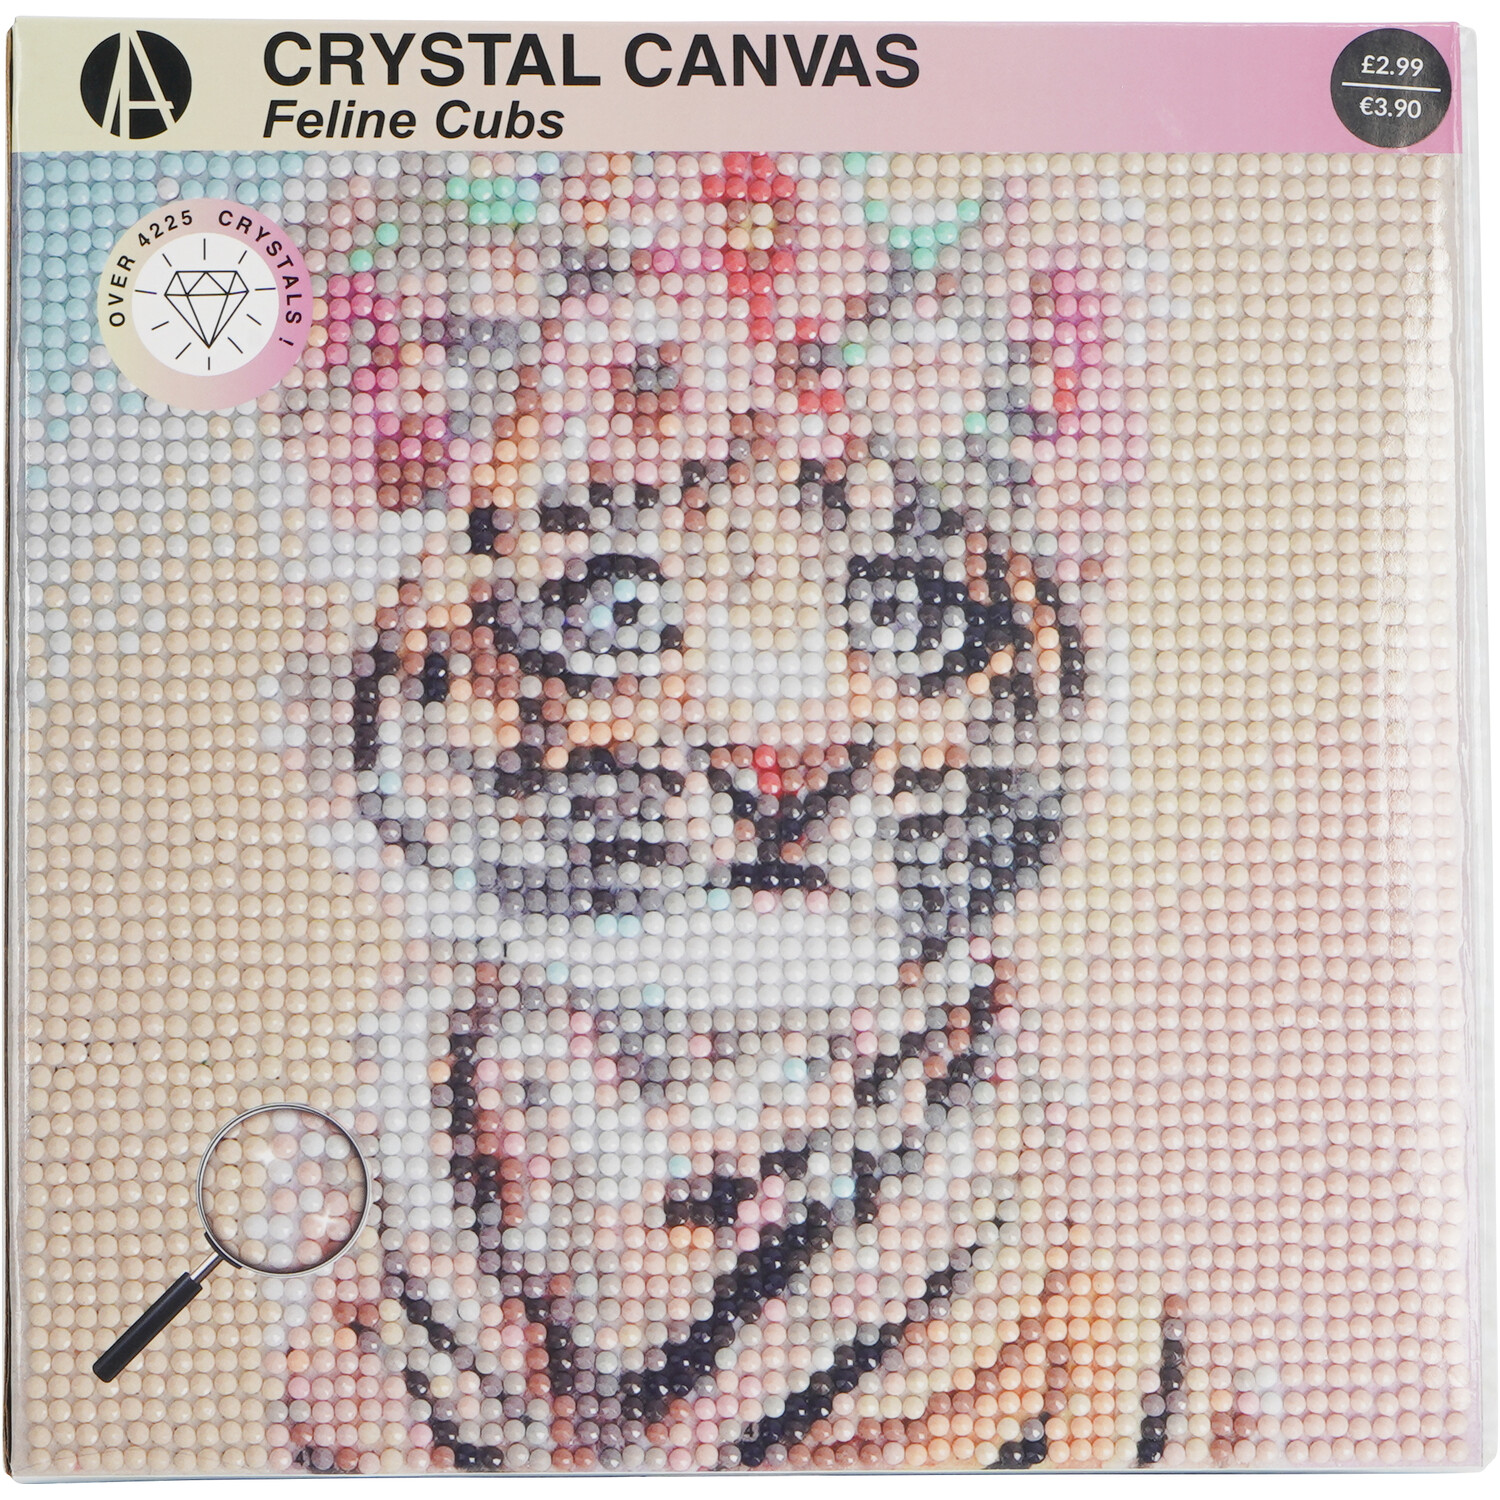 Crystal Canvas Feline Cubs Image 4